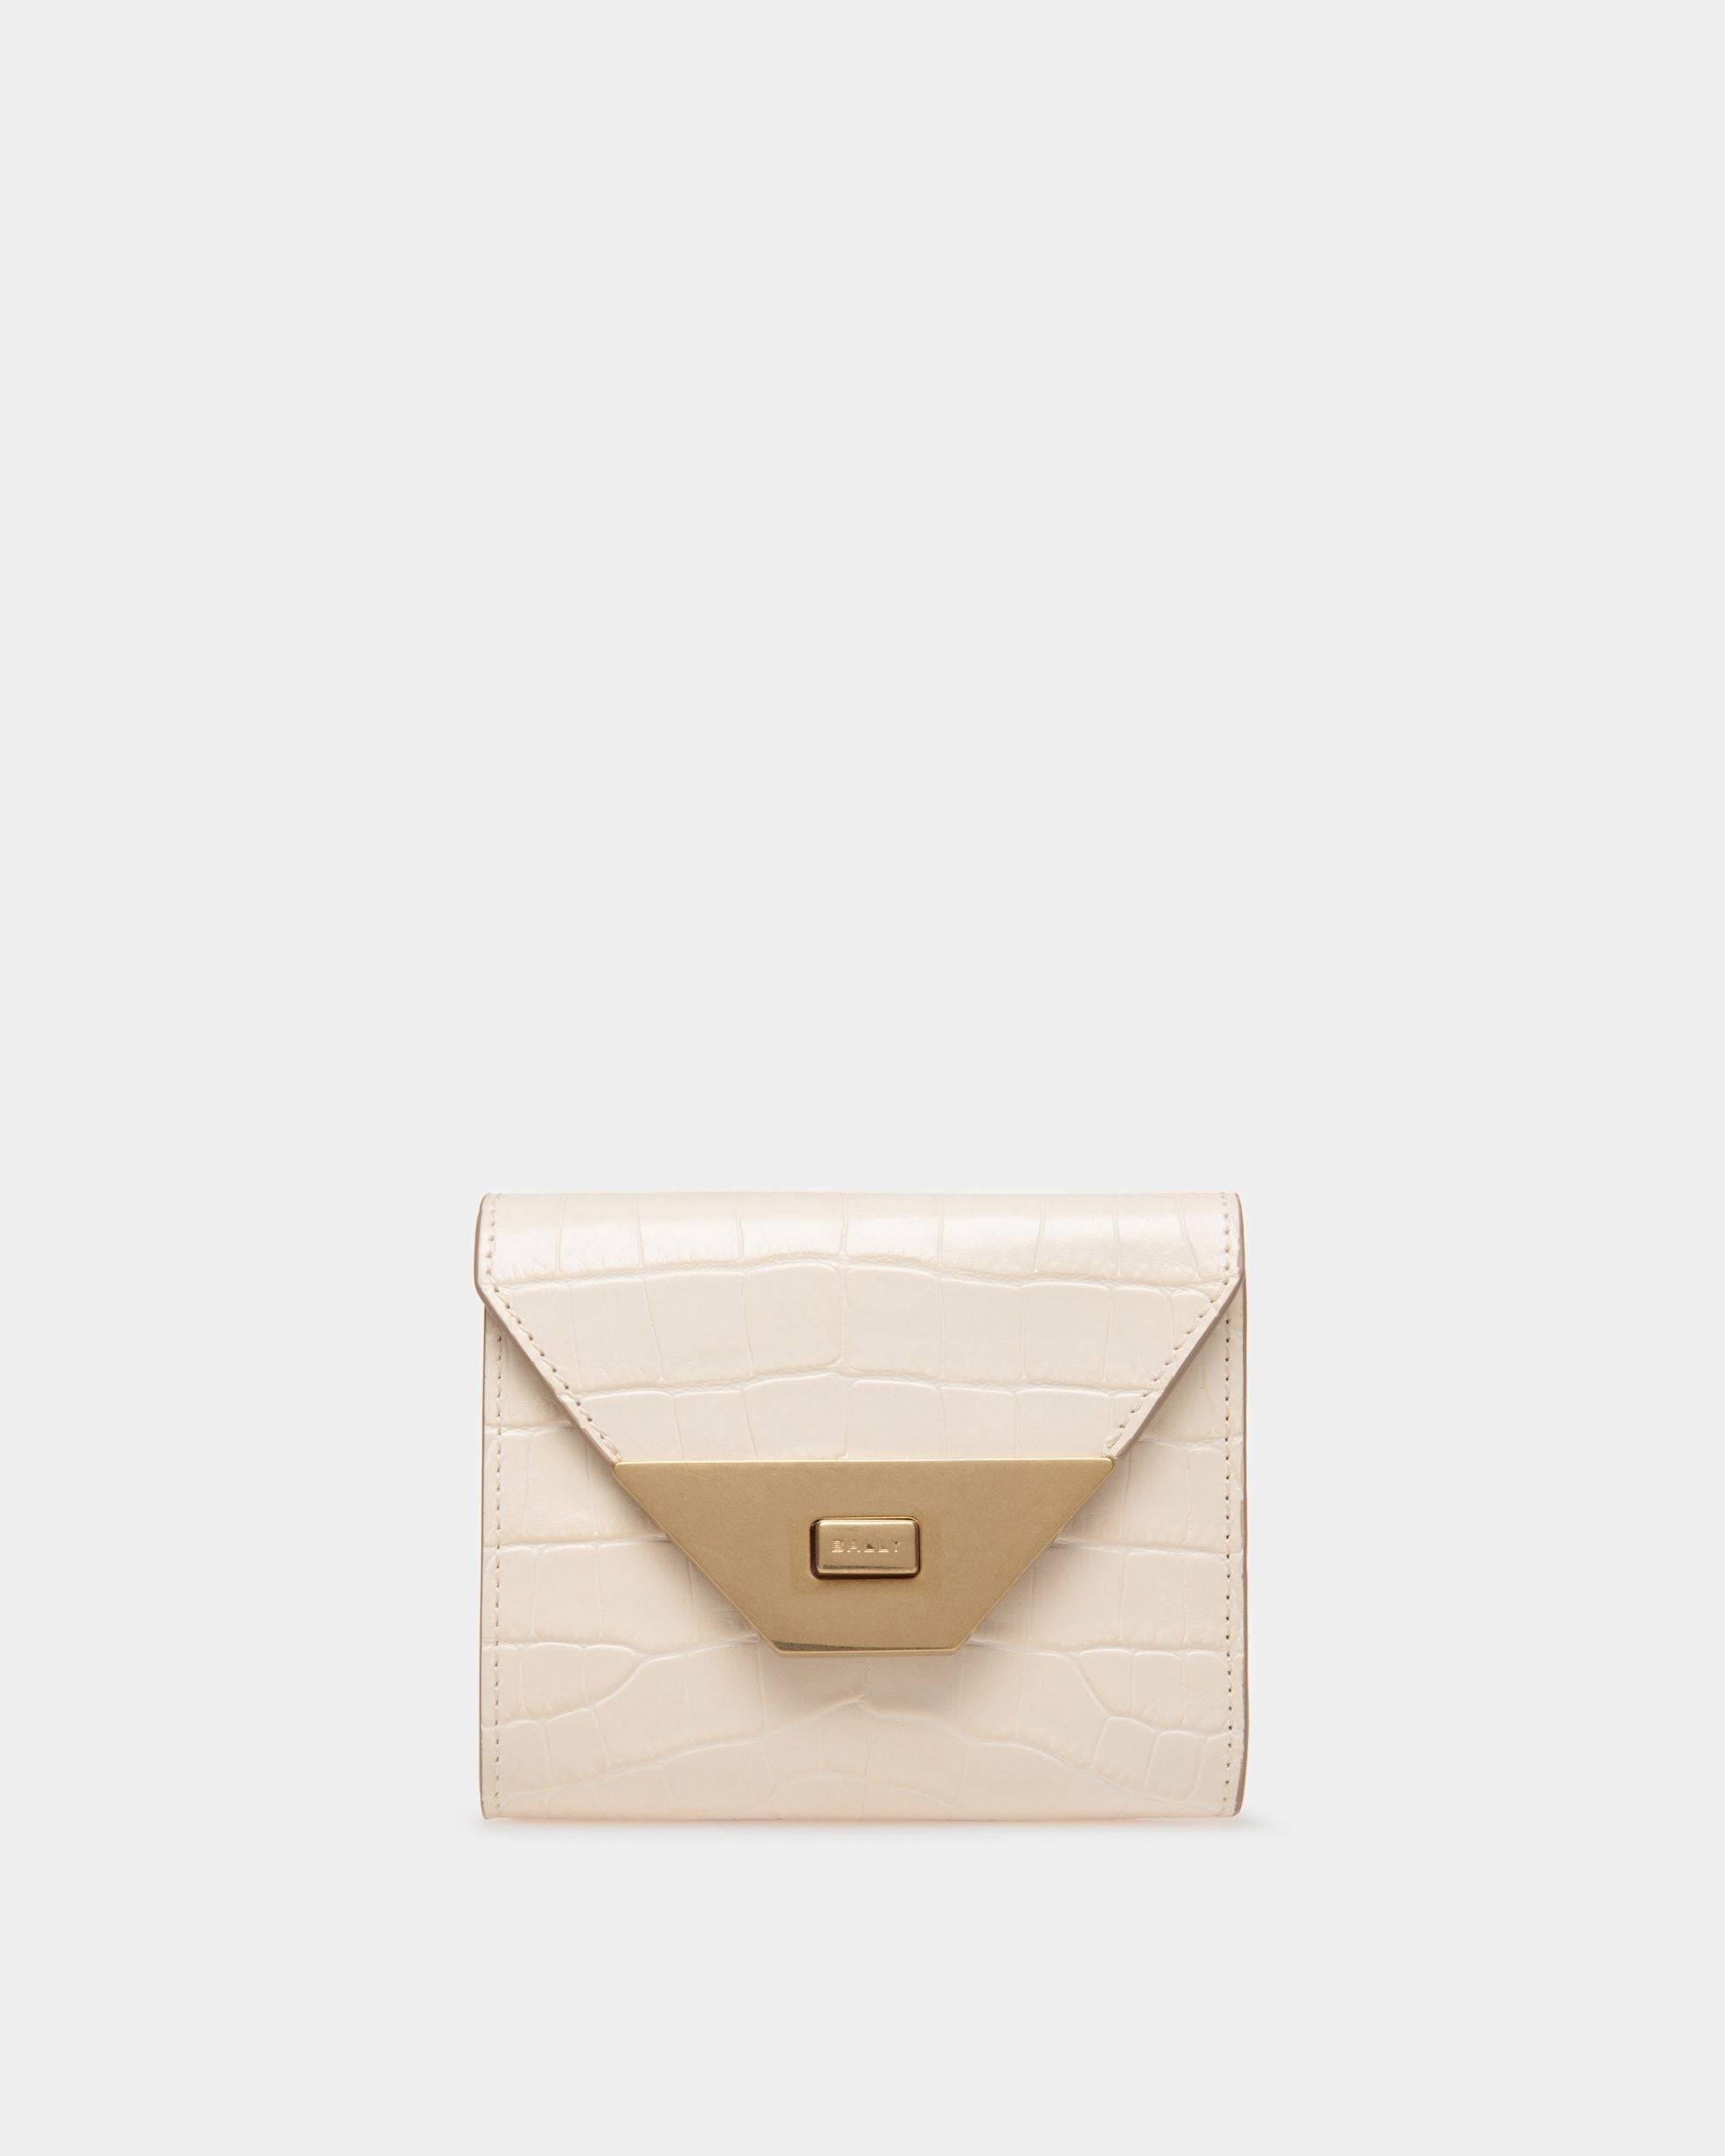 Tilt | Women's Wallet in White Crocodile Print Leather | Bally | Still Life Front